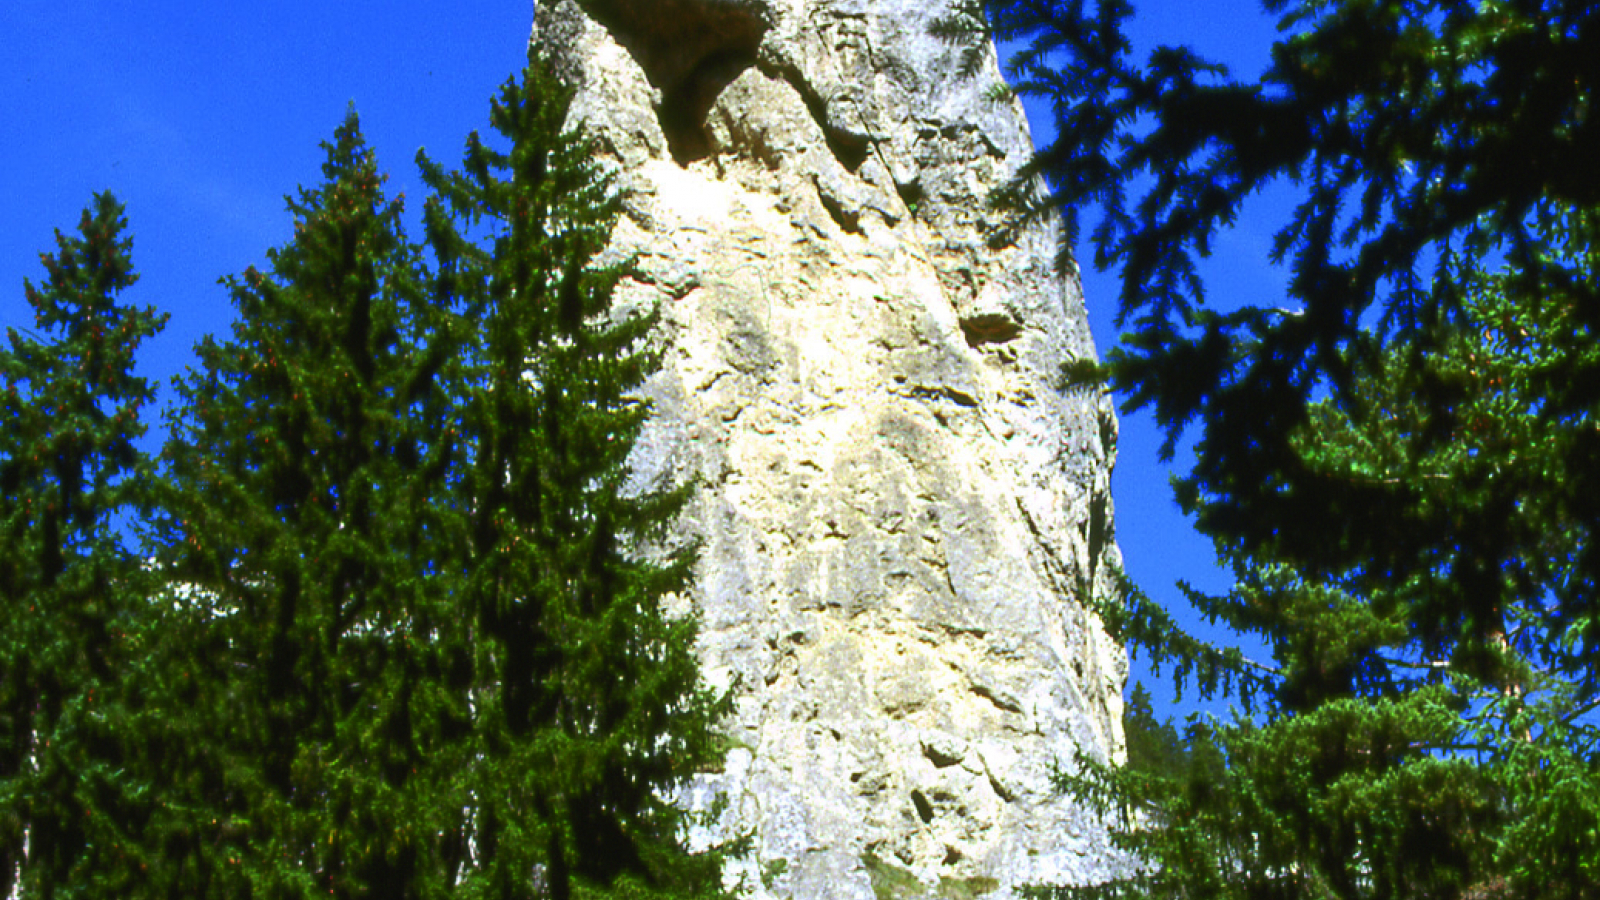 Aiguille de cargneule de 93m de hauteur - Escalade, balade en forêt